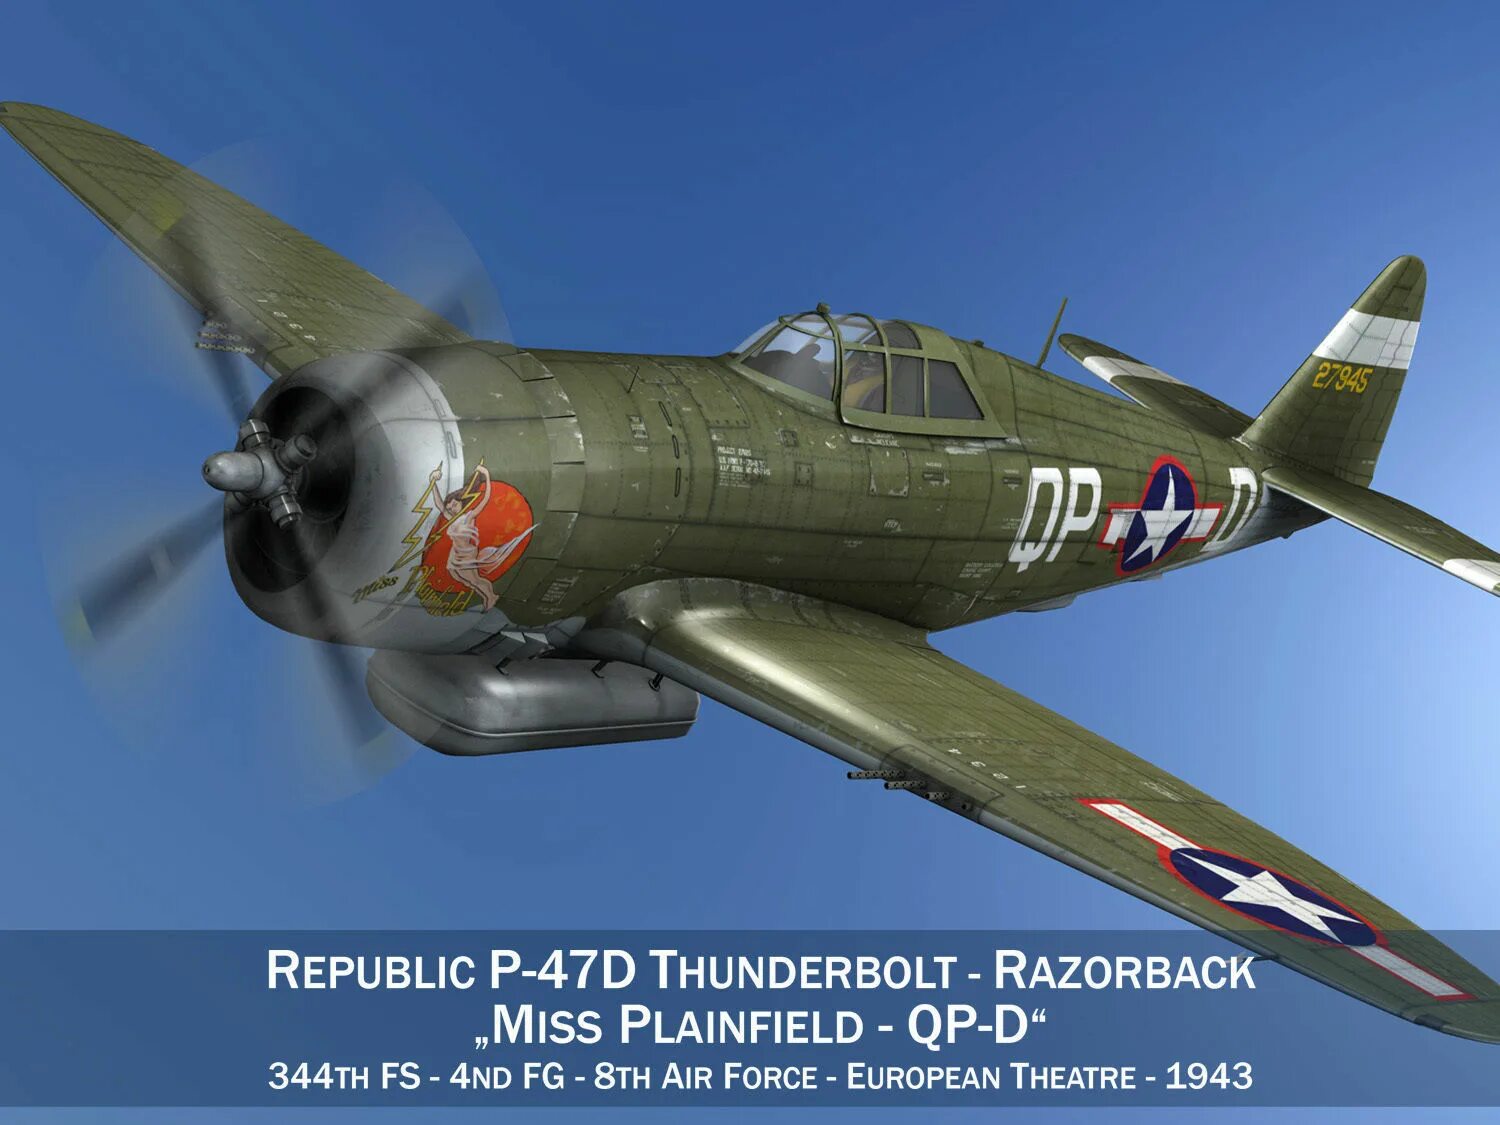 P-47d. Republic p-47 Thunderbolt. P-47 Thunderbolt Art. Хобби истребитель.